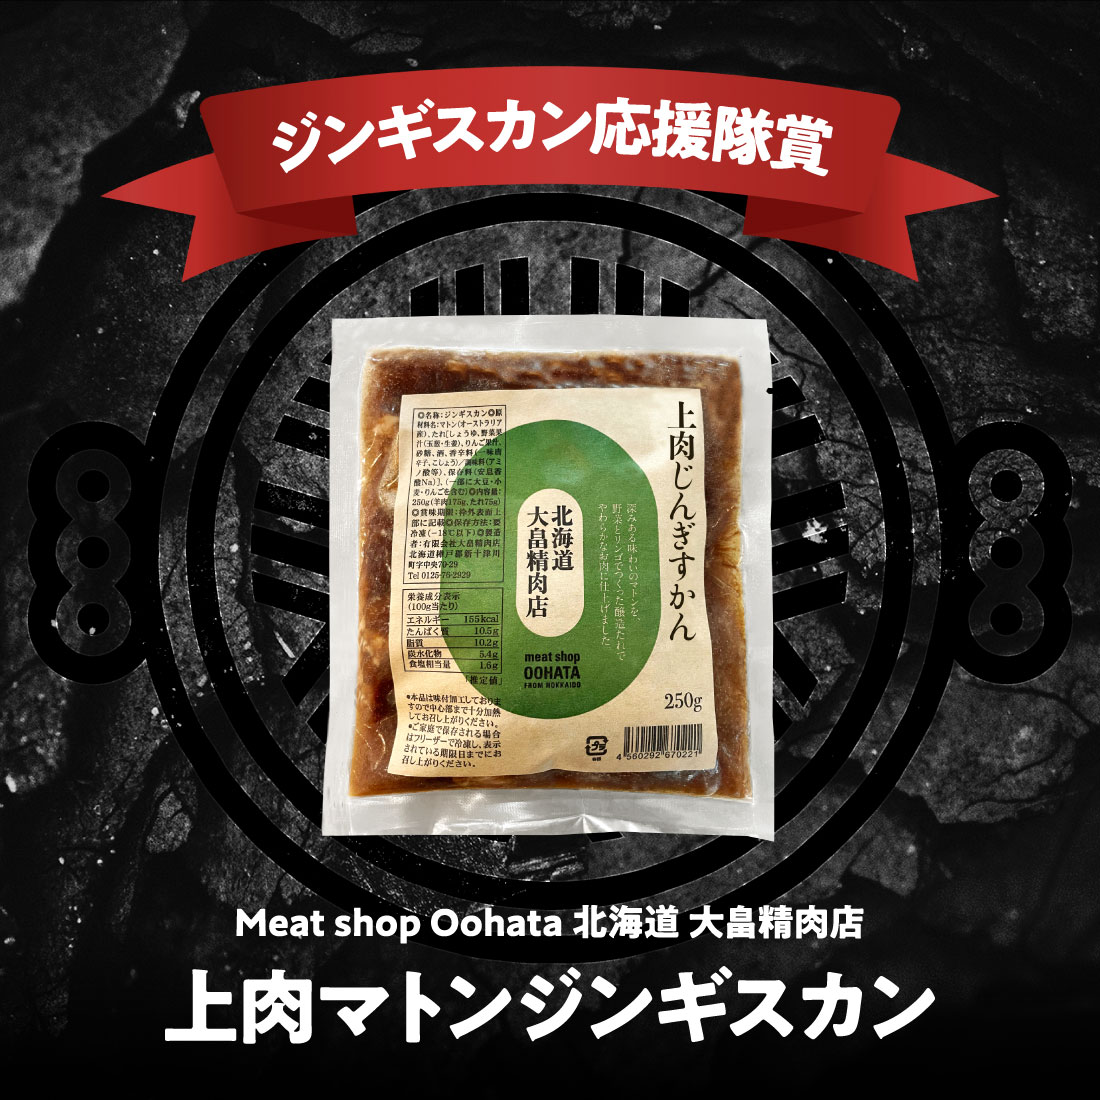 Meat shop Oohata 北海道 大畠精肉店 上肉マトンジンギスカン